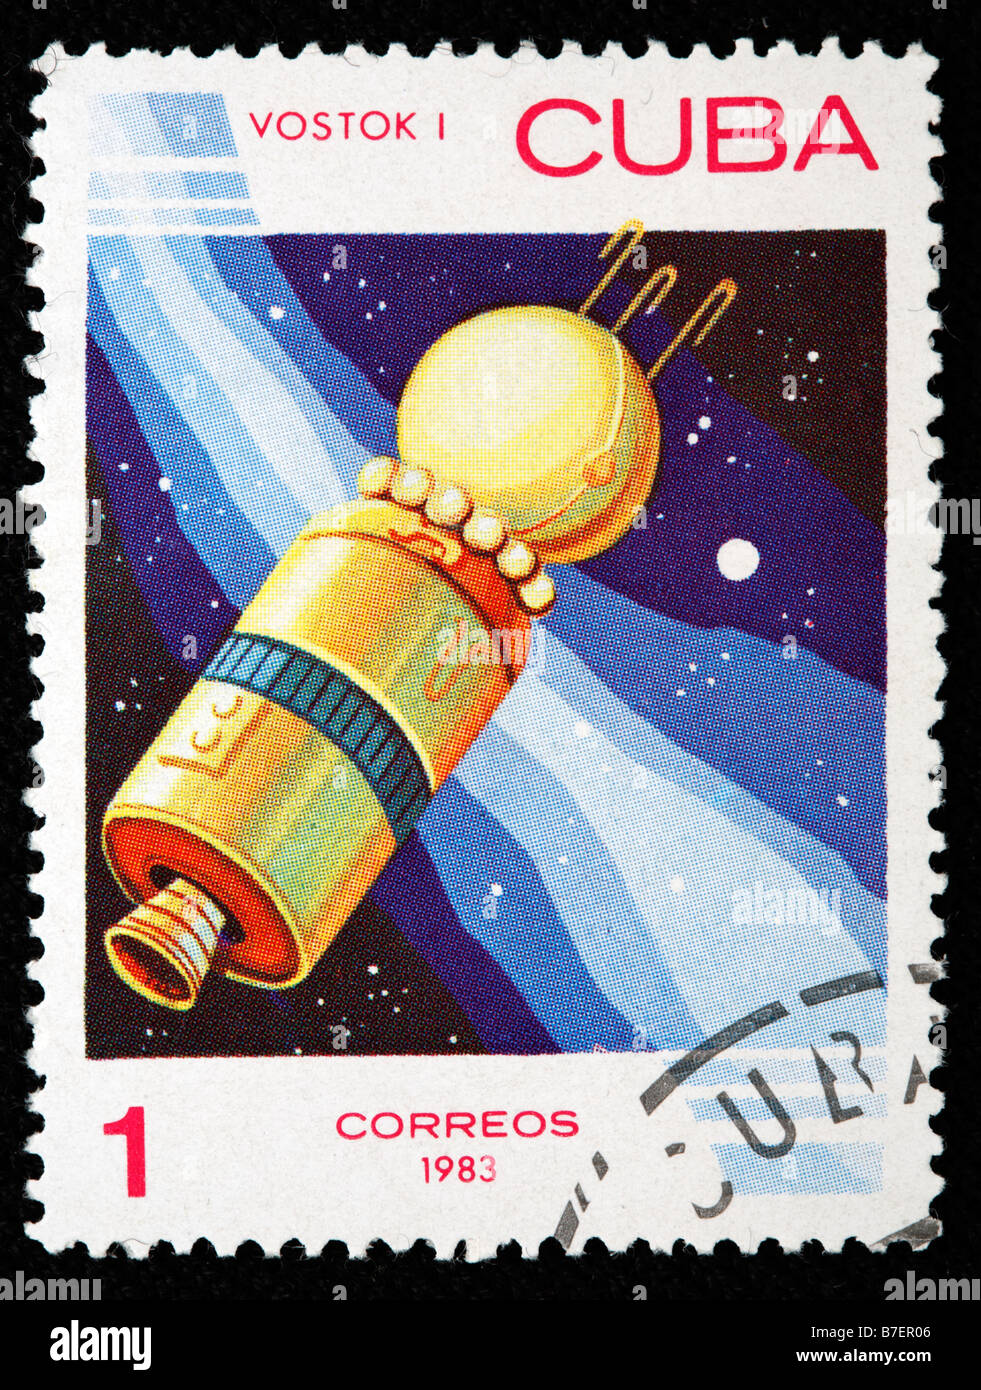 Sowjetische Raumschiff "Wostok 1", Briefmarke, Kuba, 1983 Stockfoto